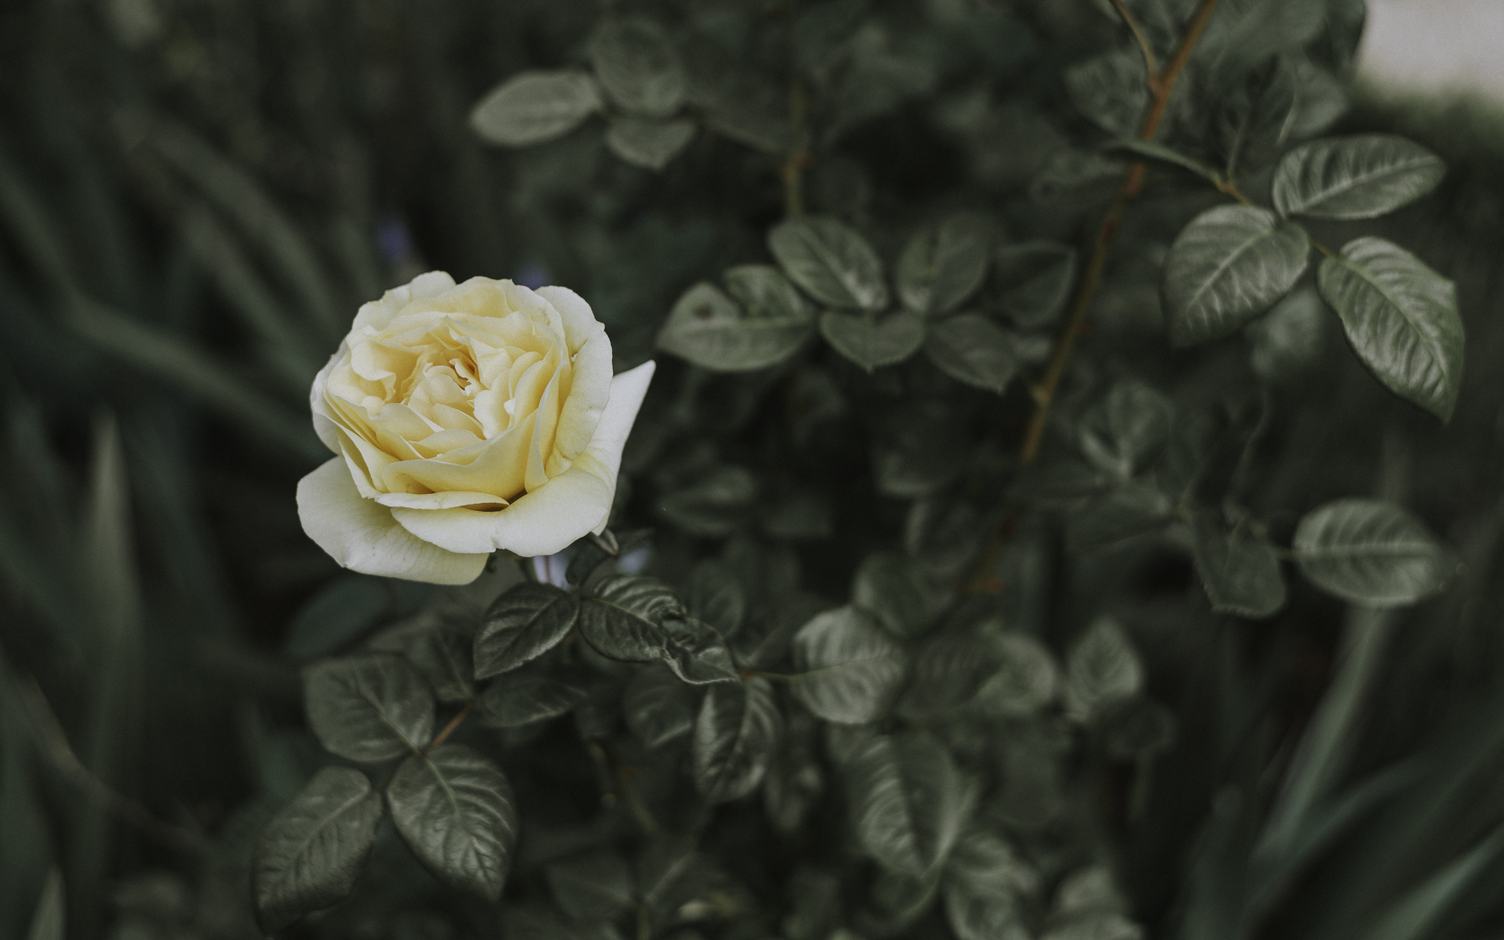 Single Flower of Yellow Rose on the Bush